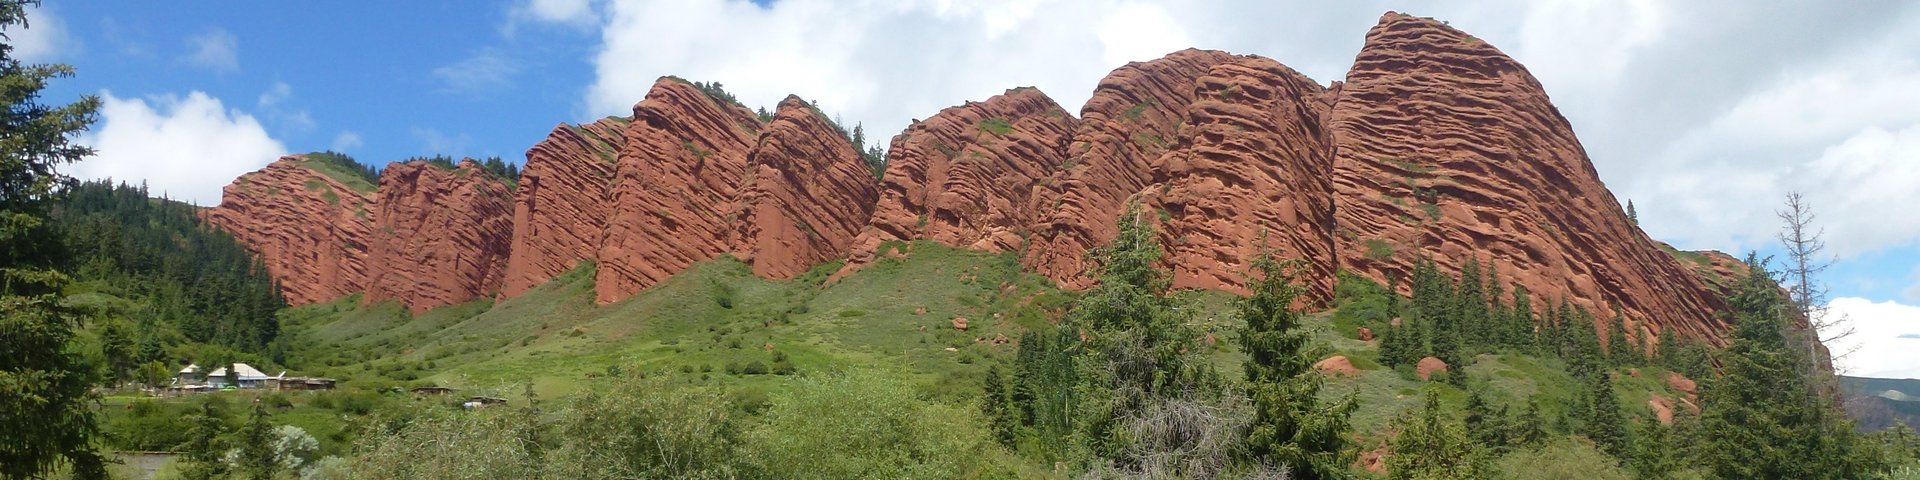 Rote Felsformationen in Dscheti Ögus in Kirgistan